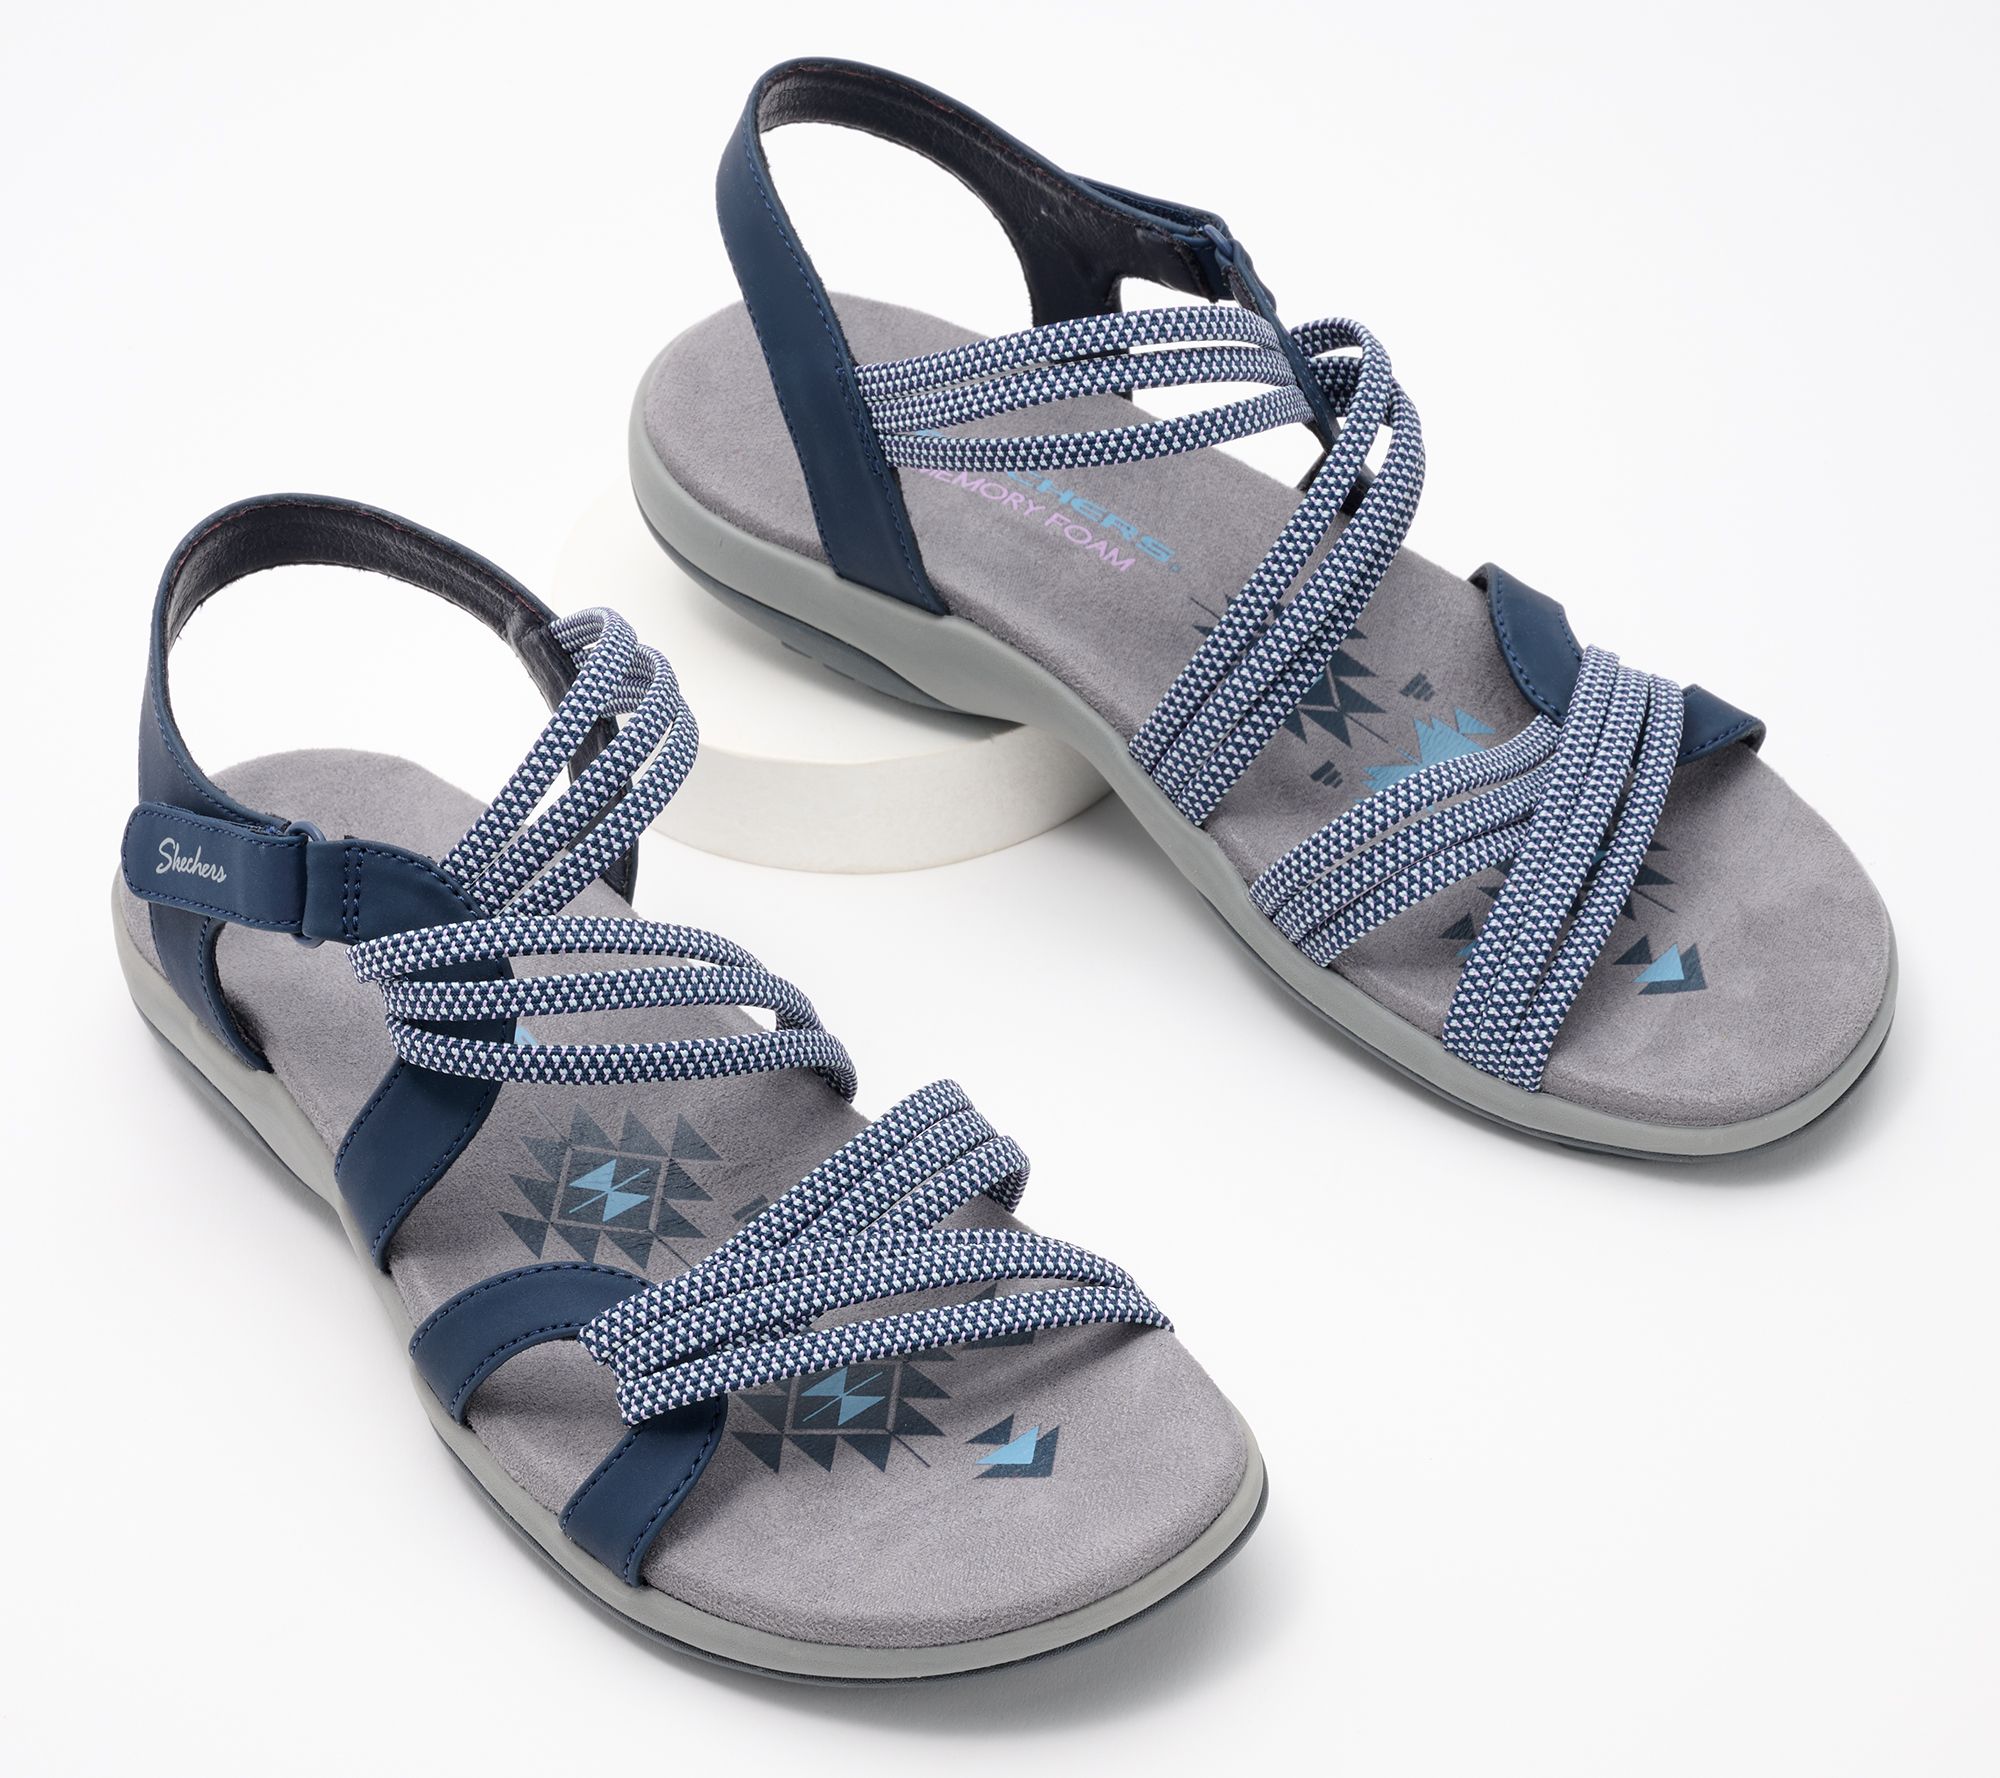 Skechers Sandals - QVC.com